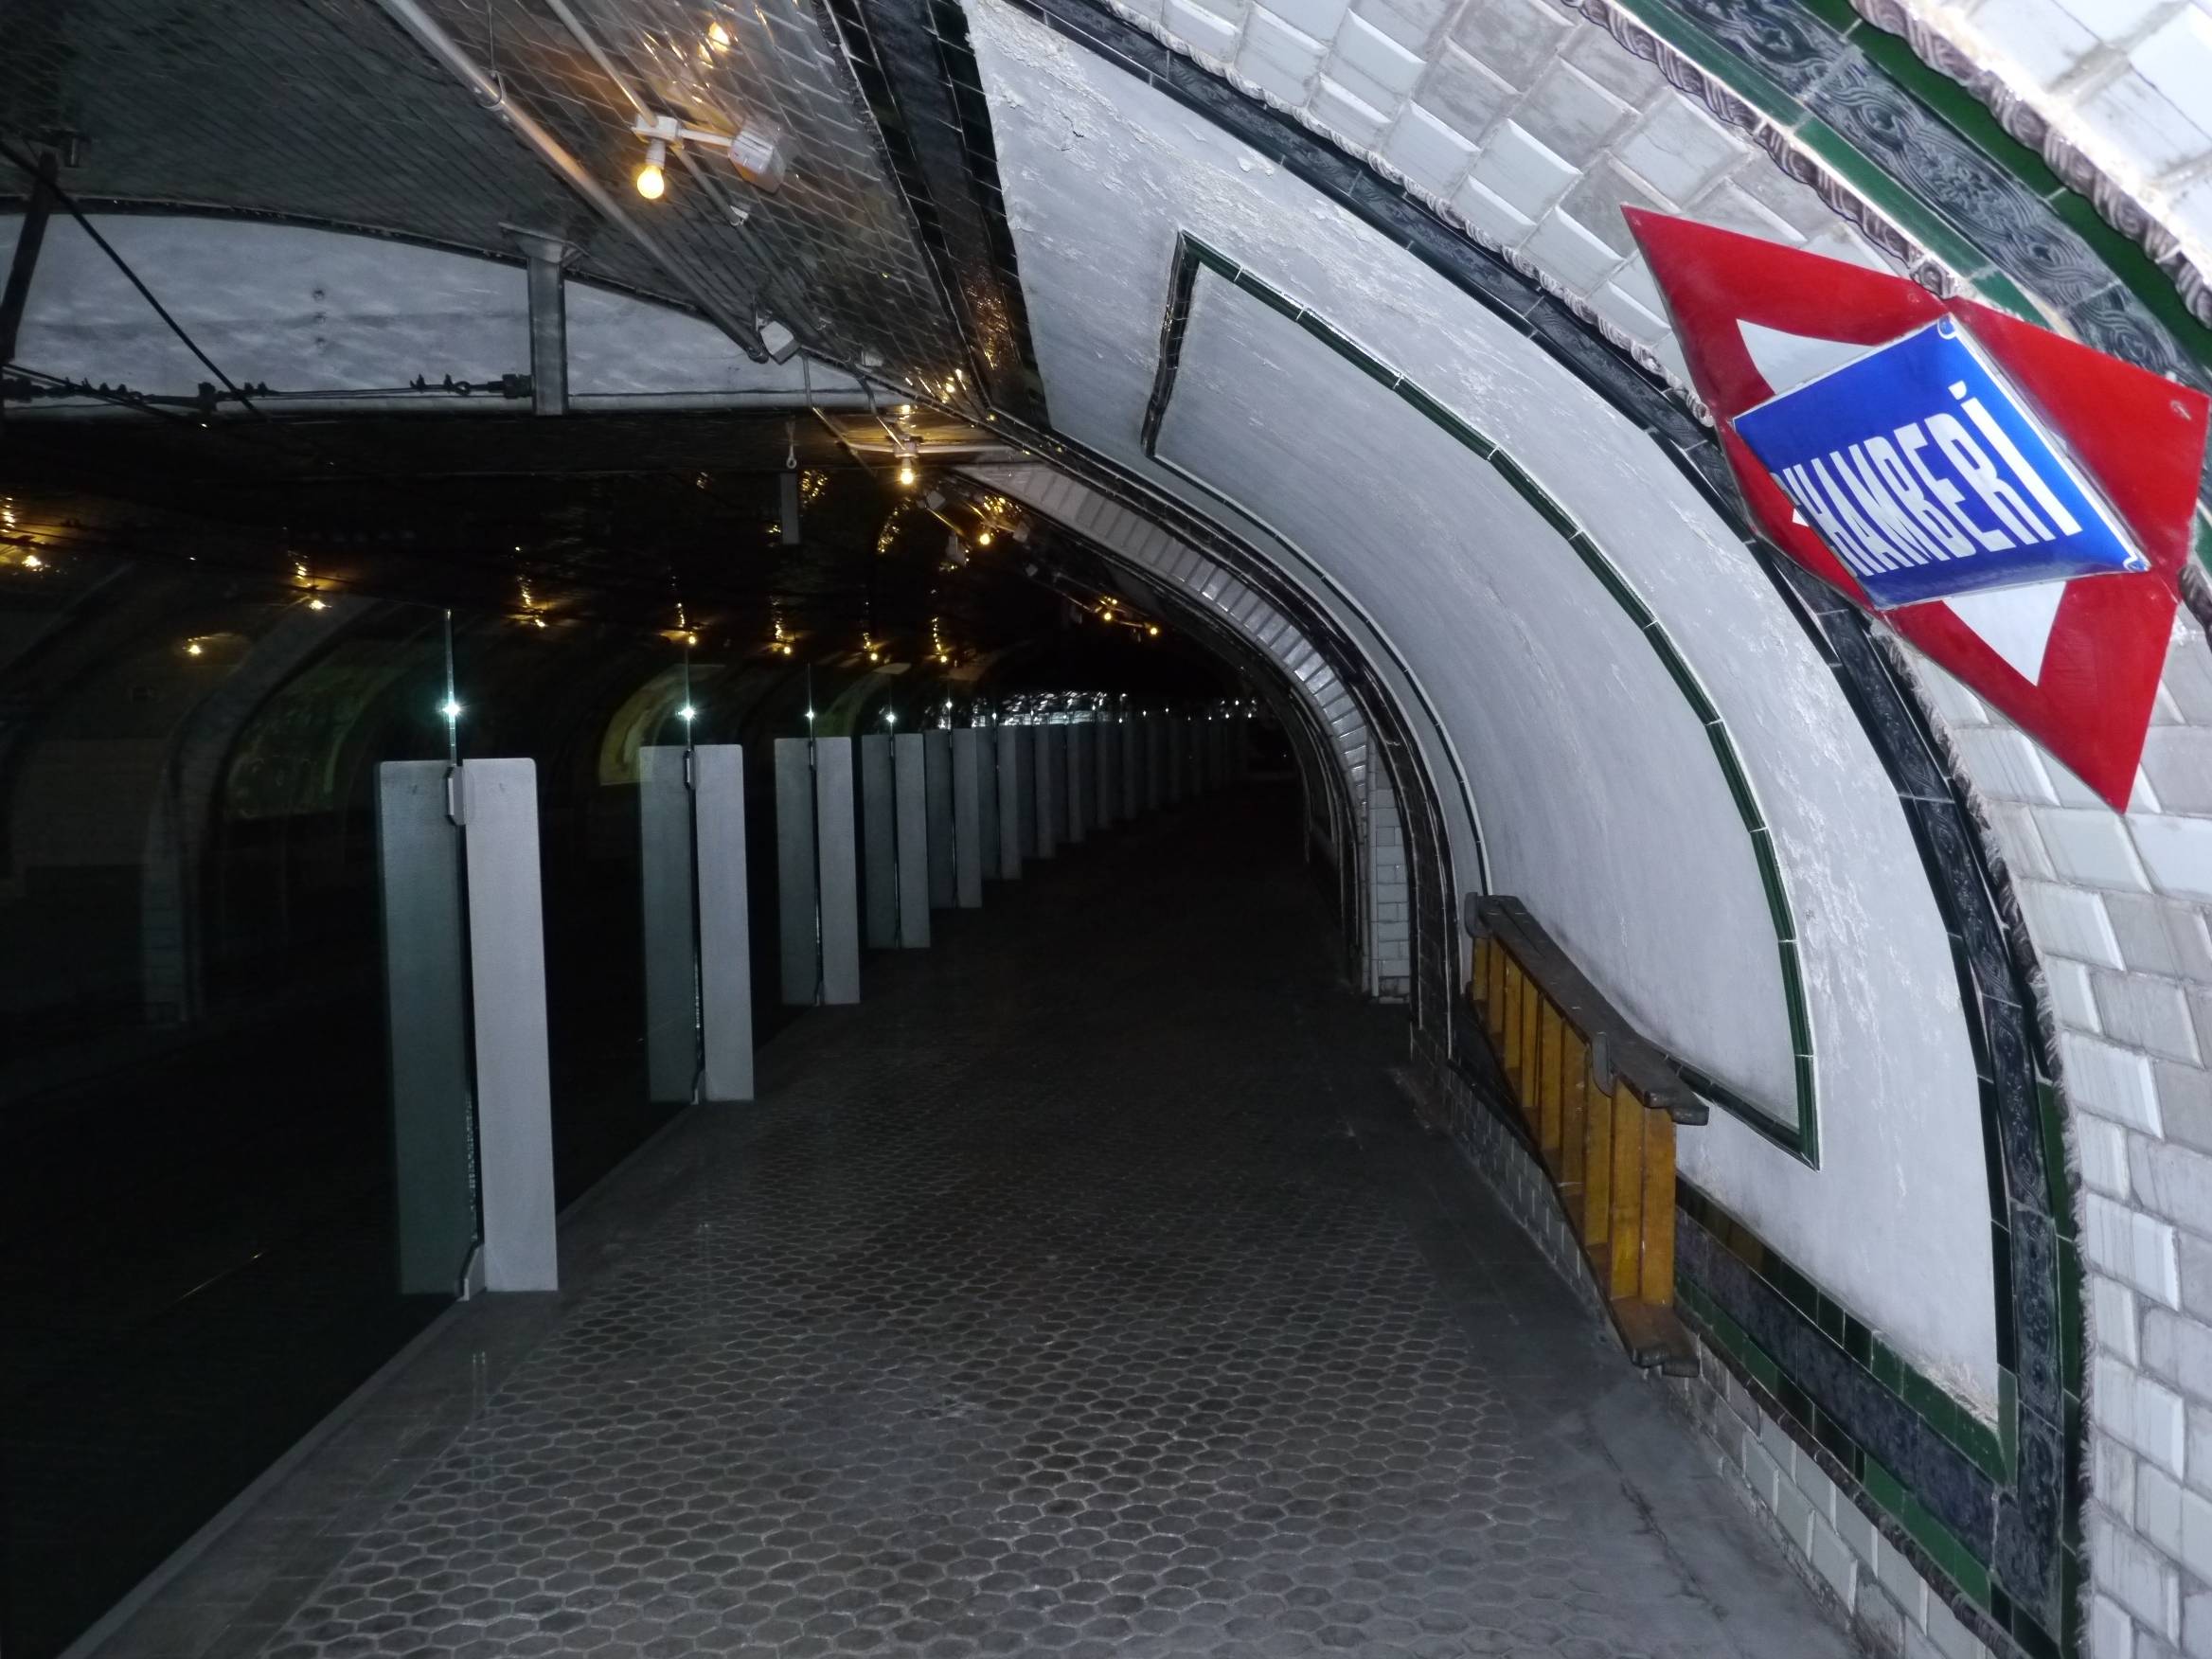 10 lugares desconocidos de Madrid - Estación abandonada de Chamberí